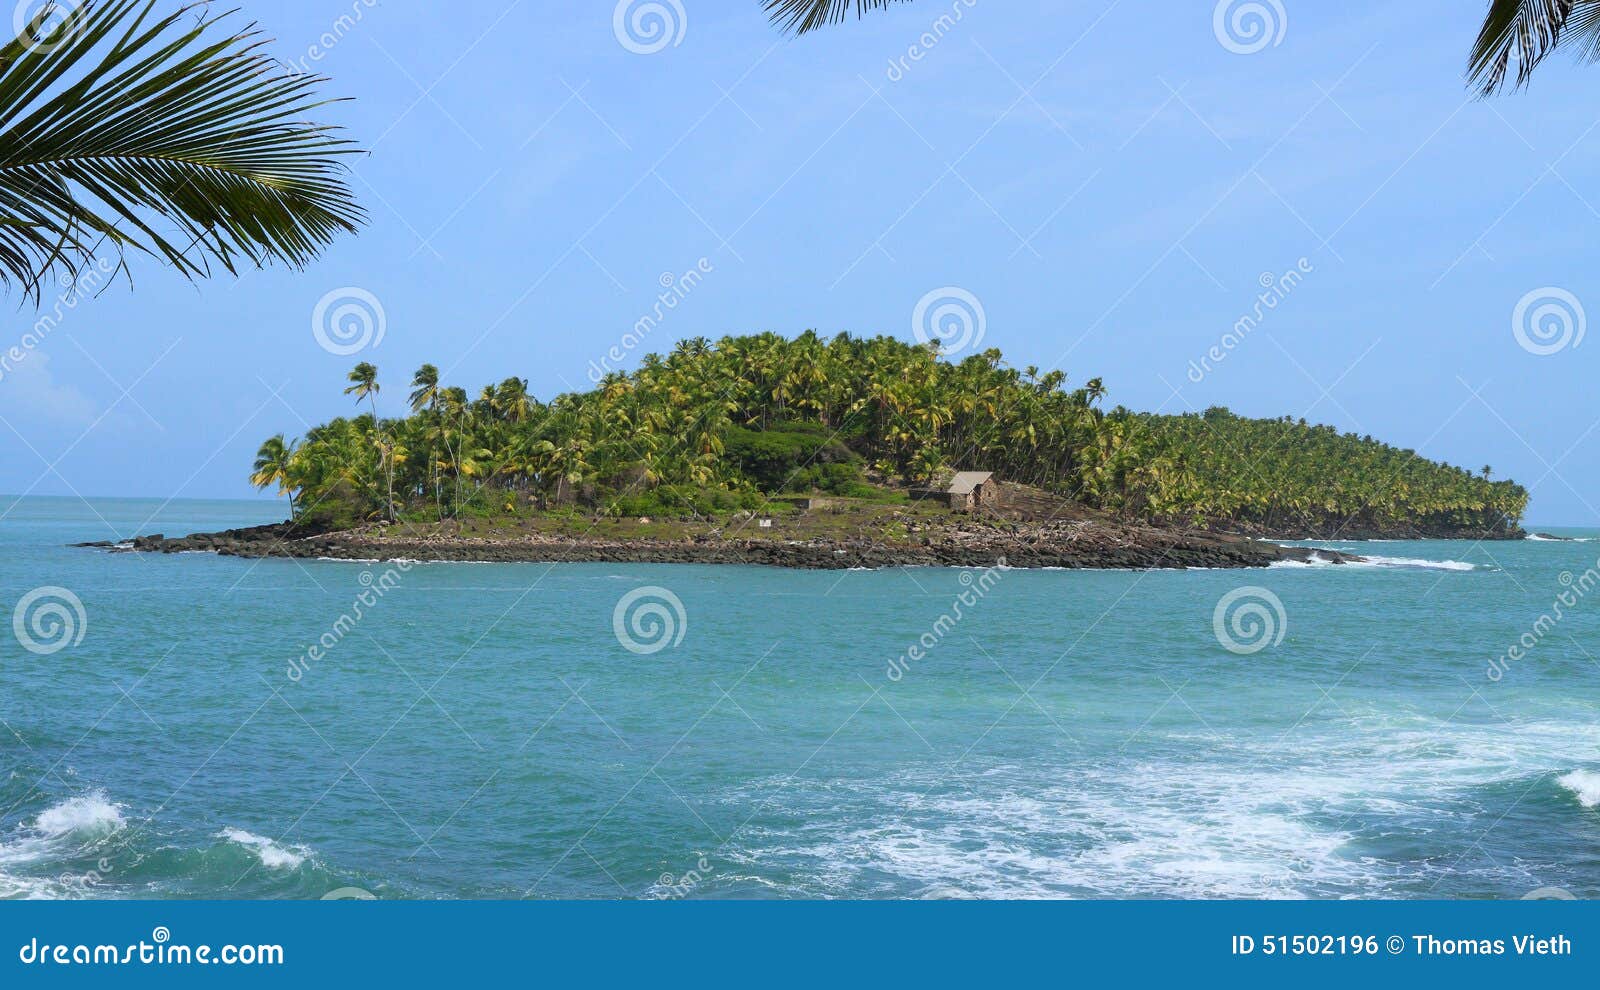 french guiana, iles du salut (islands of salvation): devils island